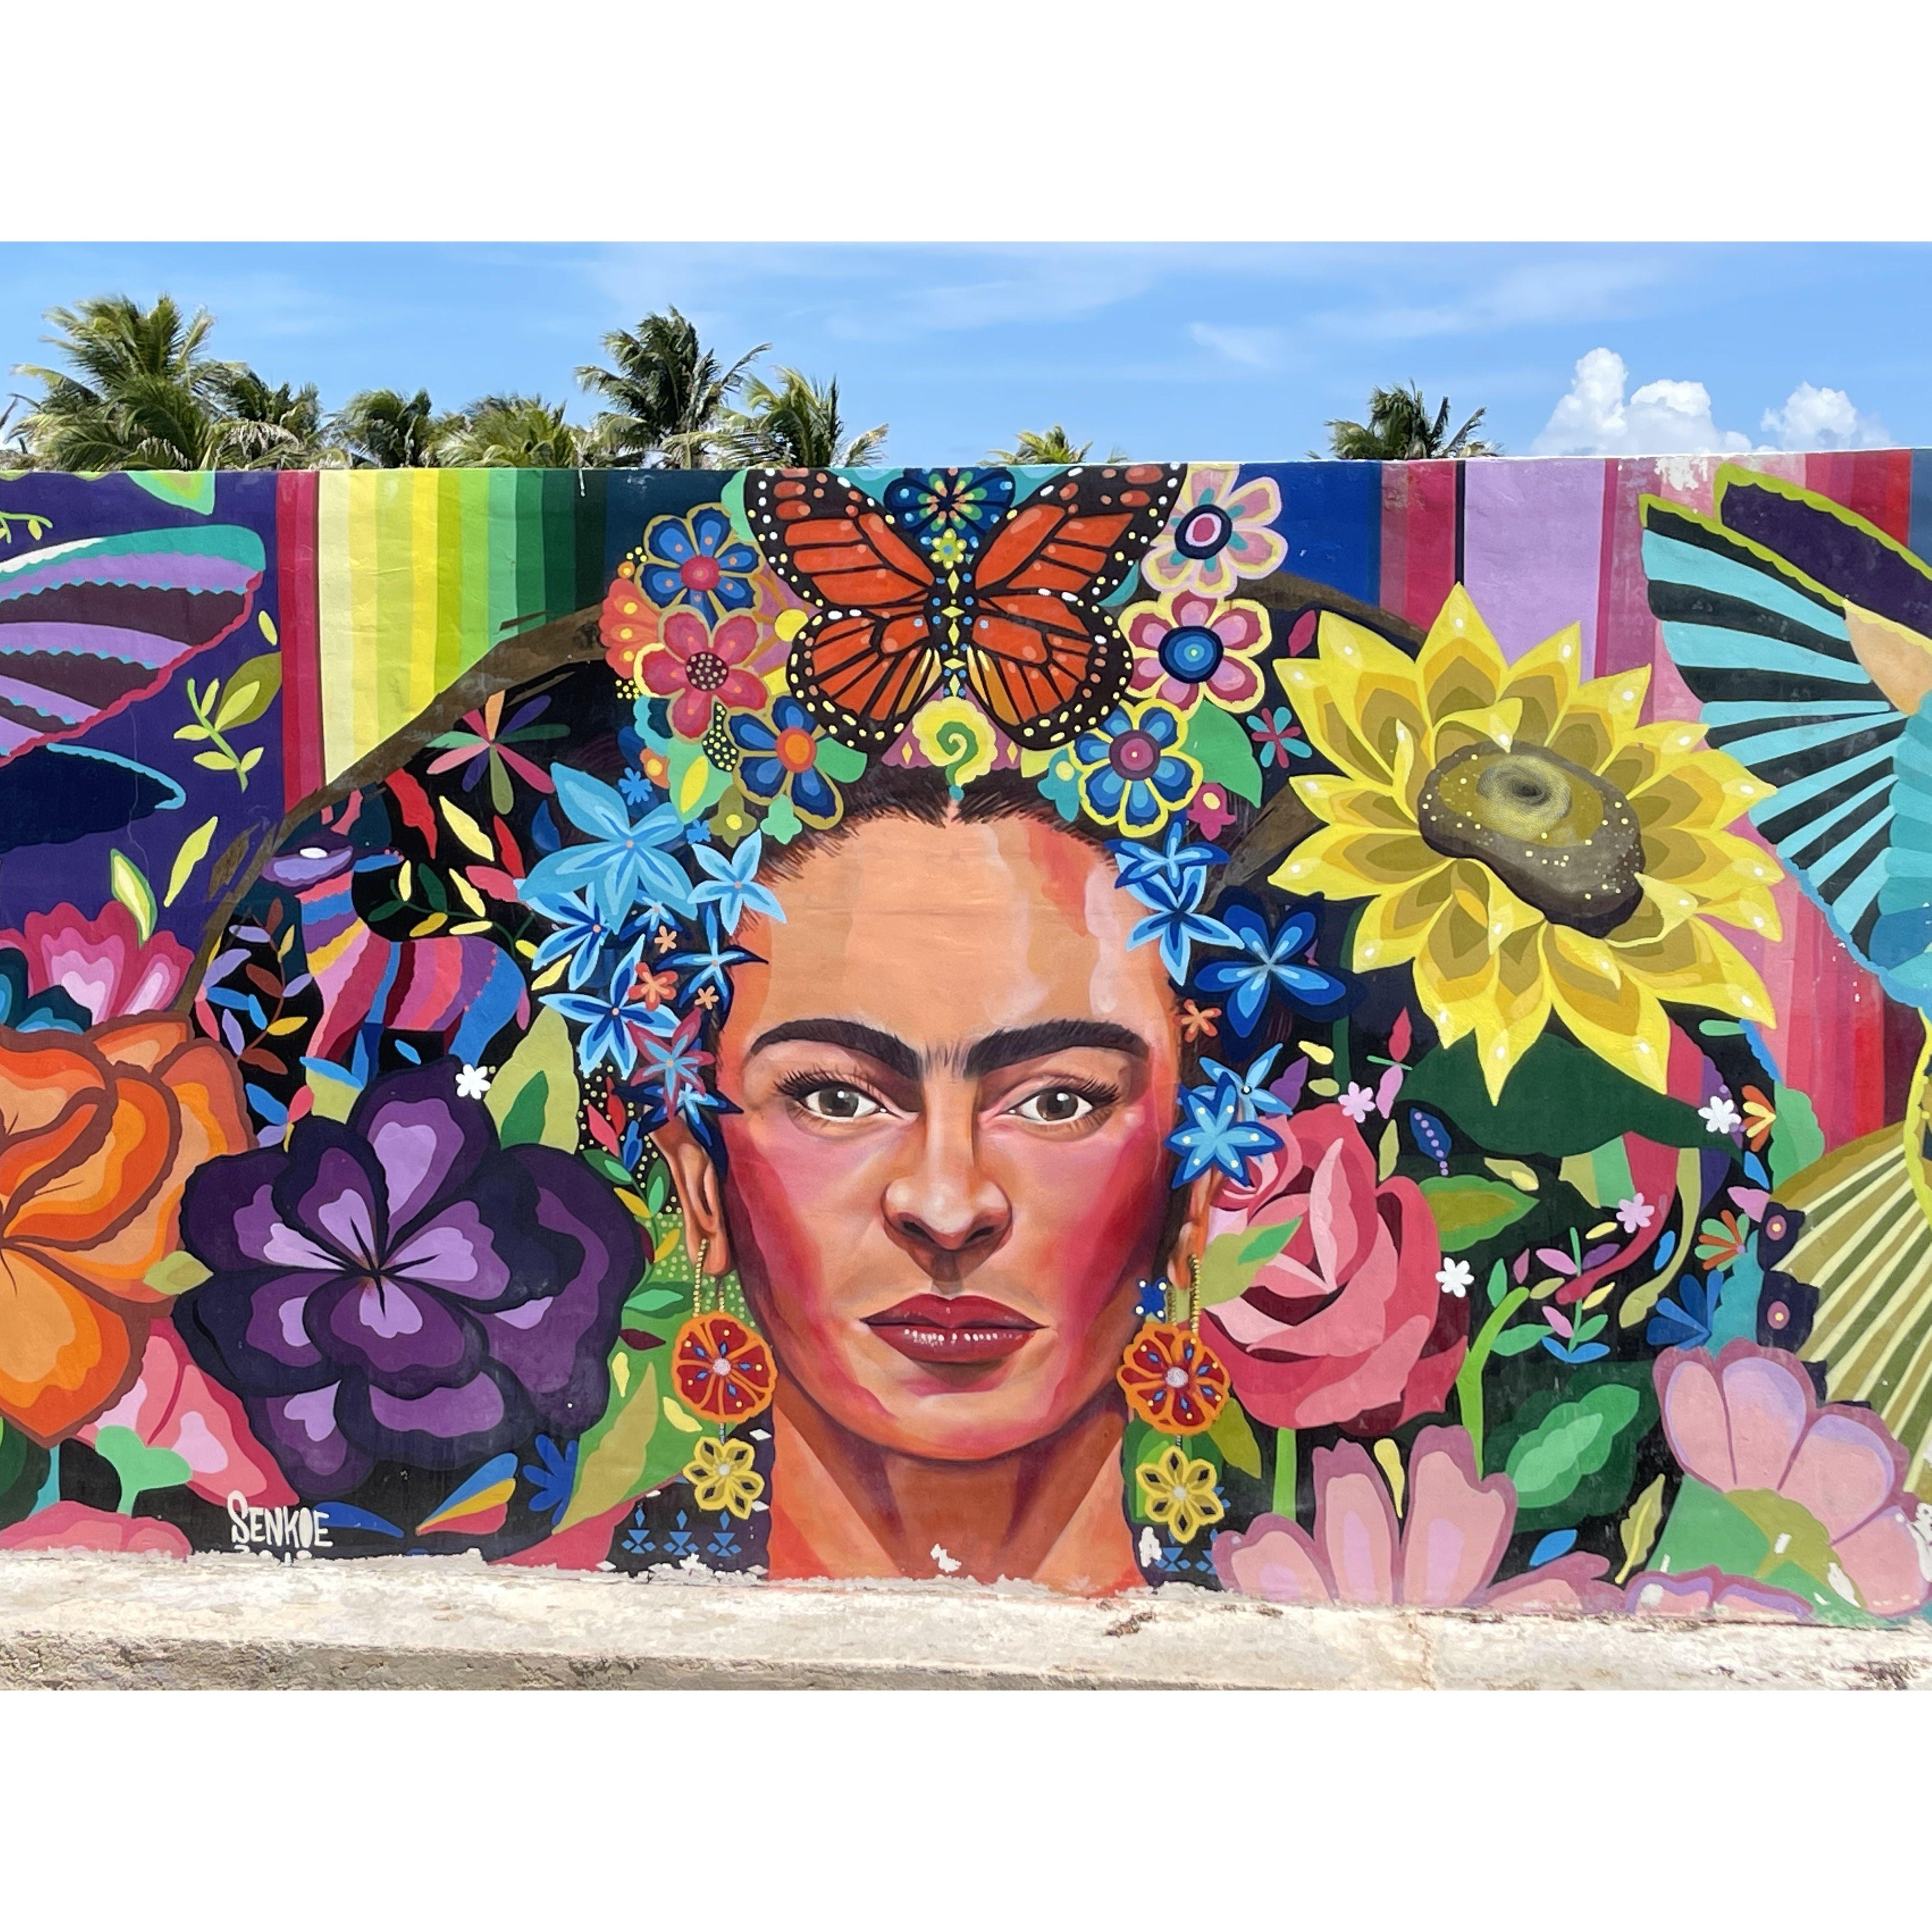 Costa Maya mural